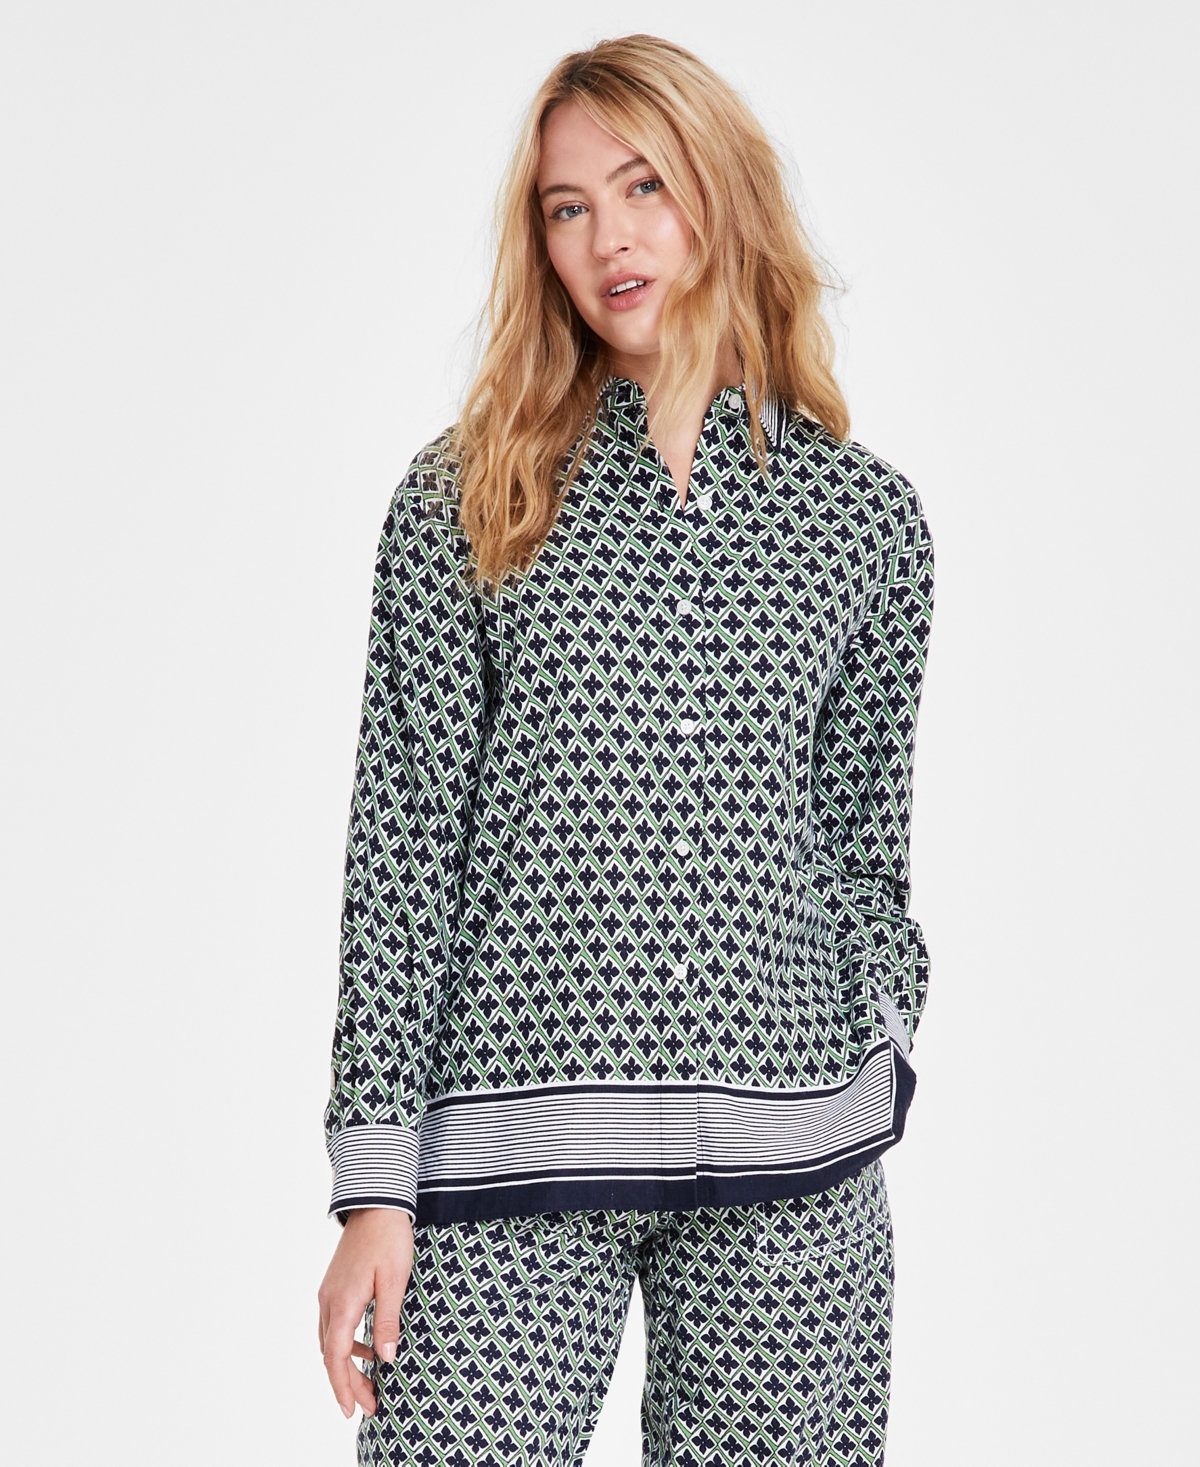 Women's Printed Button-Down Linen Tunic Top - Sltd Lime